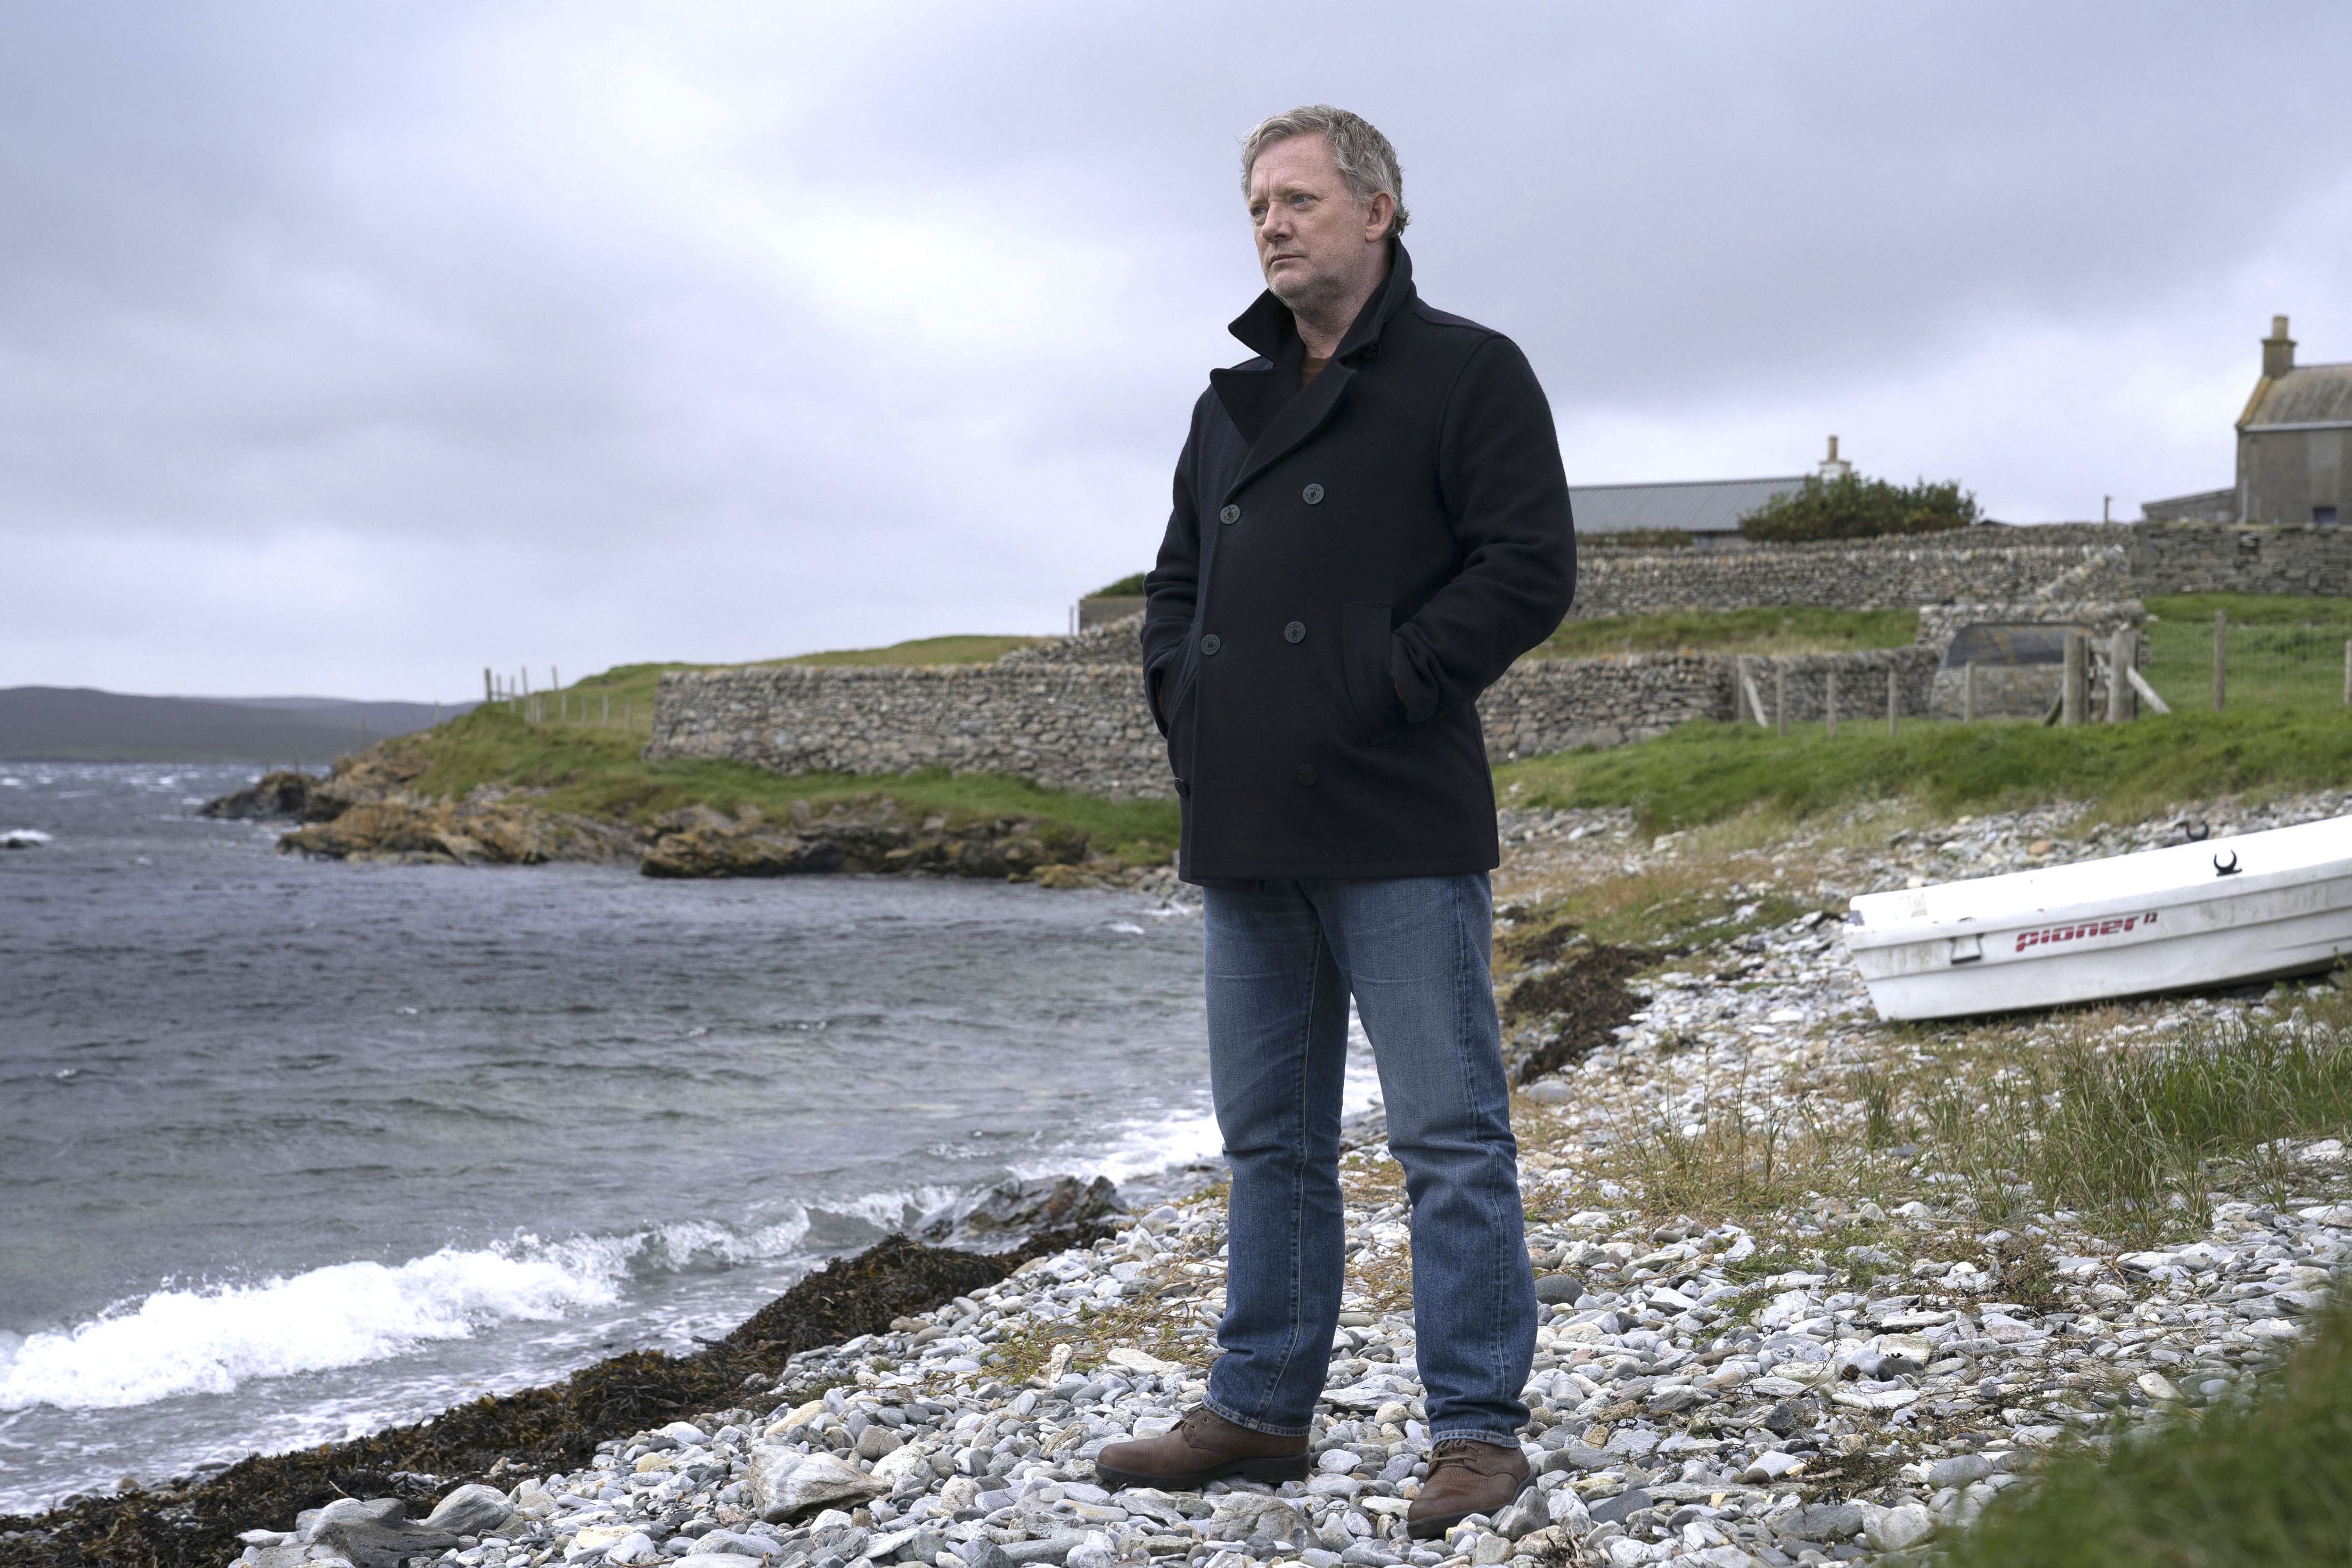 Shetland season 8 cast, Meet the new and returning characters